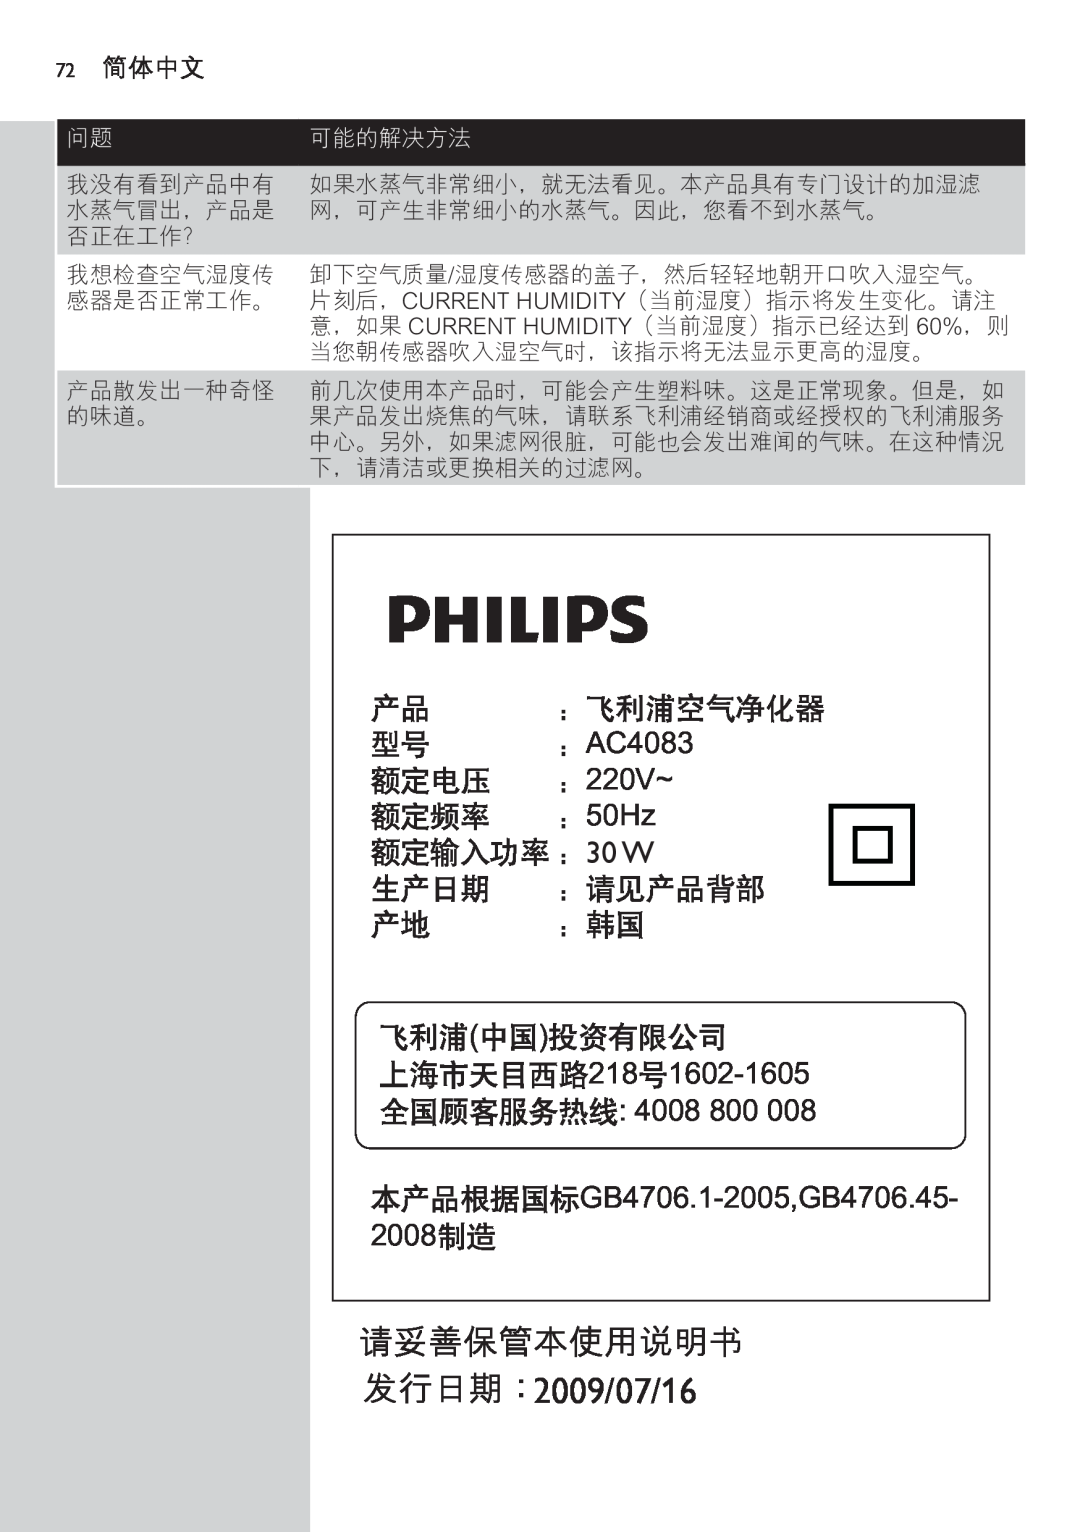 Philips 72简体中文, 问题可能的解决方法, 2009/07/16, AC4083 220V~ 50Hz 30 W, 218 1602-1605 :4008 800 GB4706.1-2005,GB4706.45, 2008 